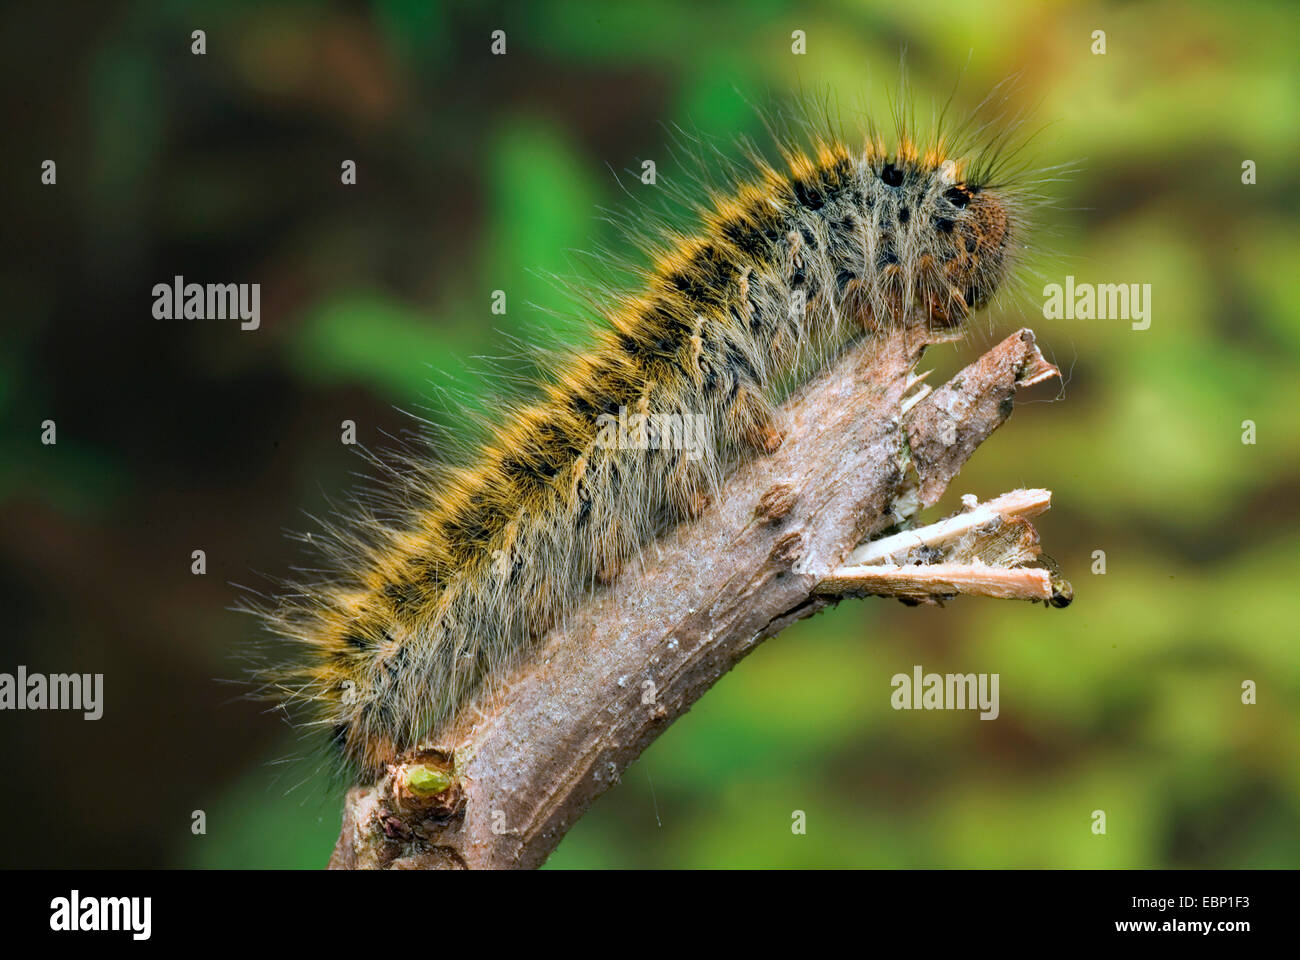 grass eggar (Lasiocampa trifolii, Pachygastria trifolii), caterpillar on a twig, Germany Stock Photo